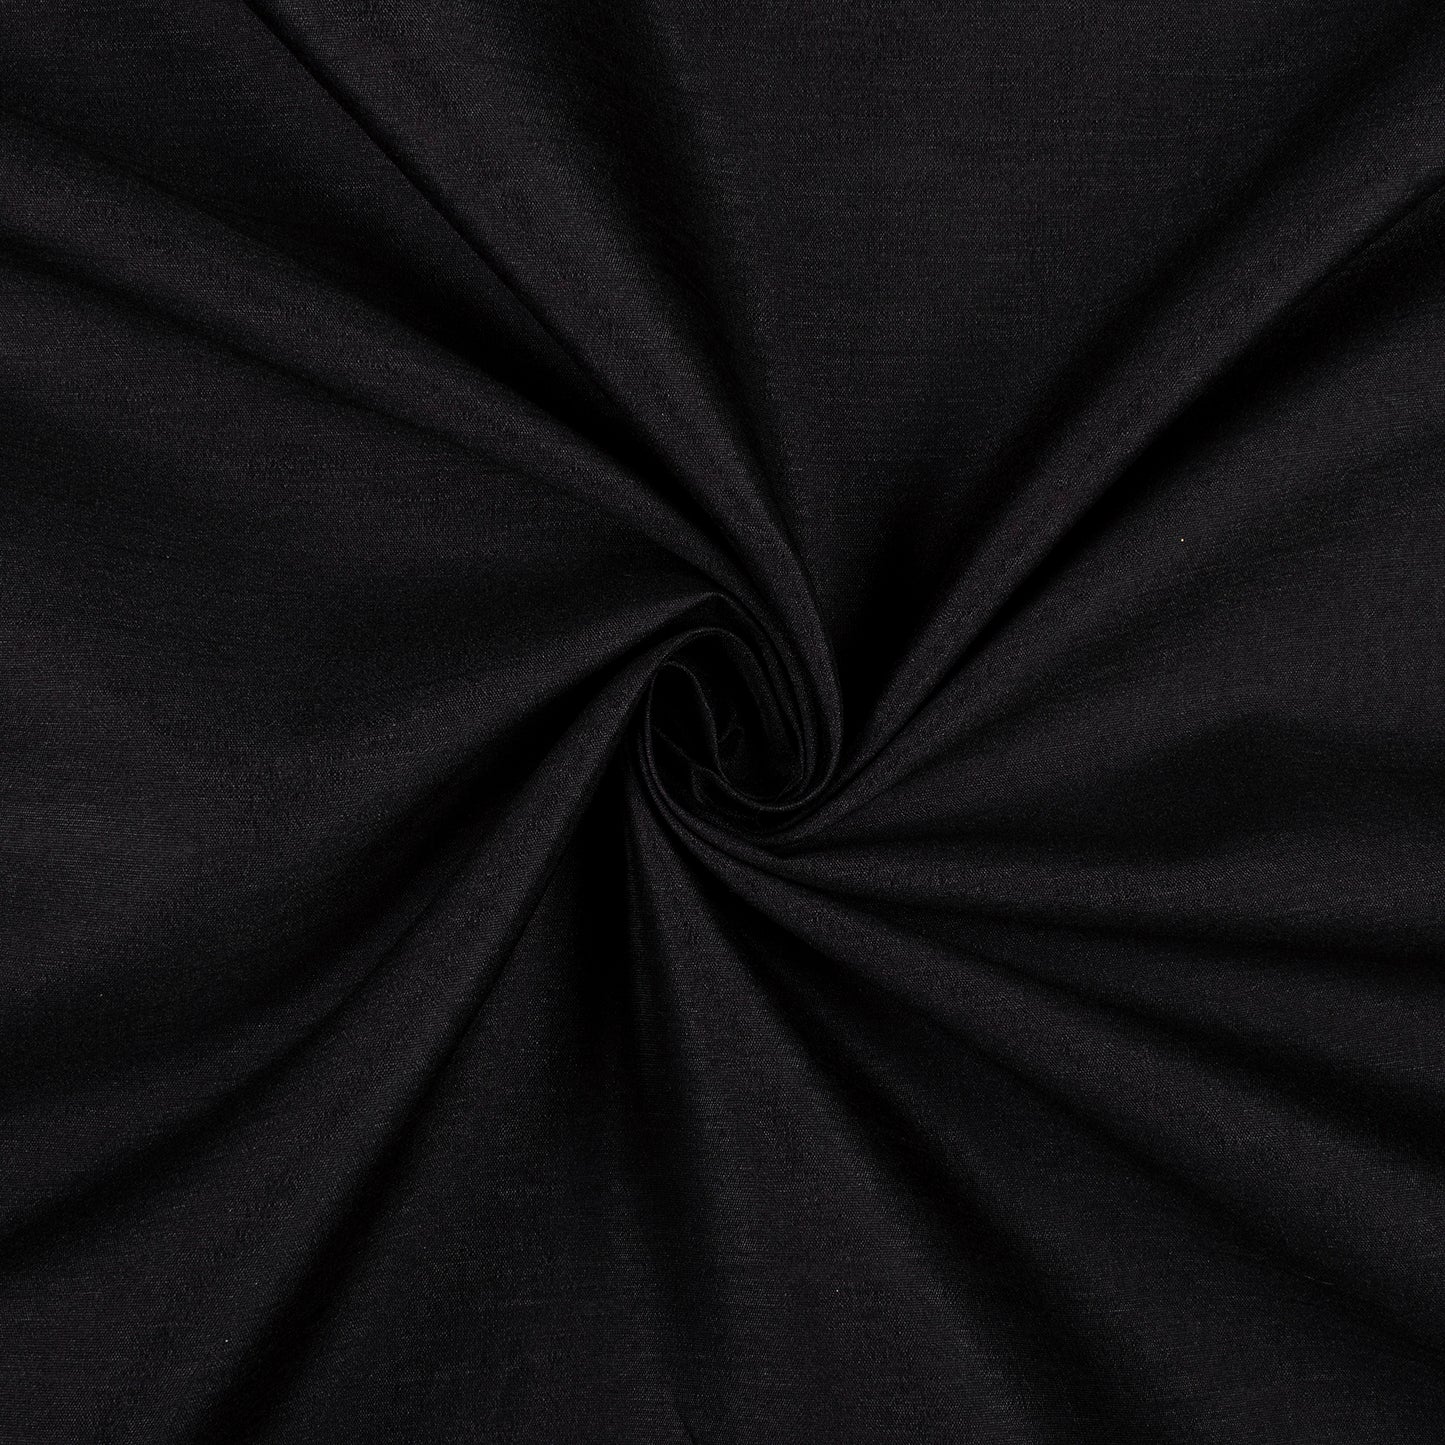 Black Textured Plain Art Silk Fabric